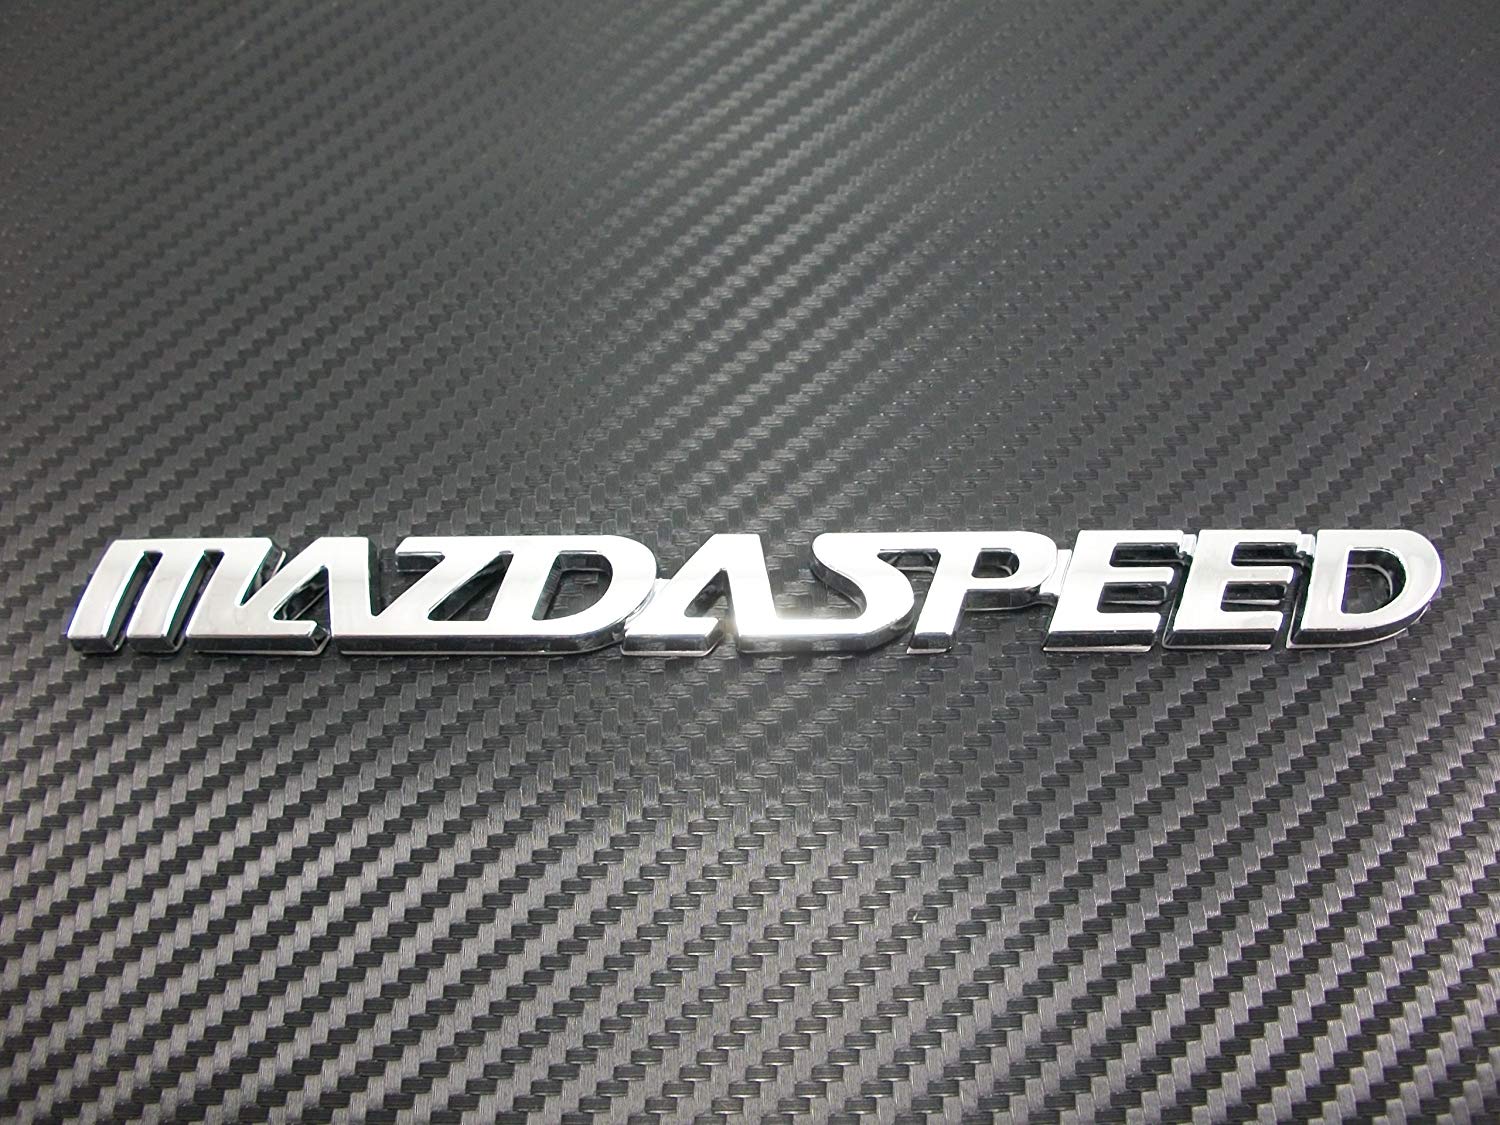 Mazdaspeed Logo - MAZDASPEED Logo Sign Emblem Decal For Car Decoration